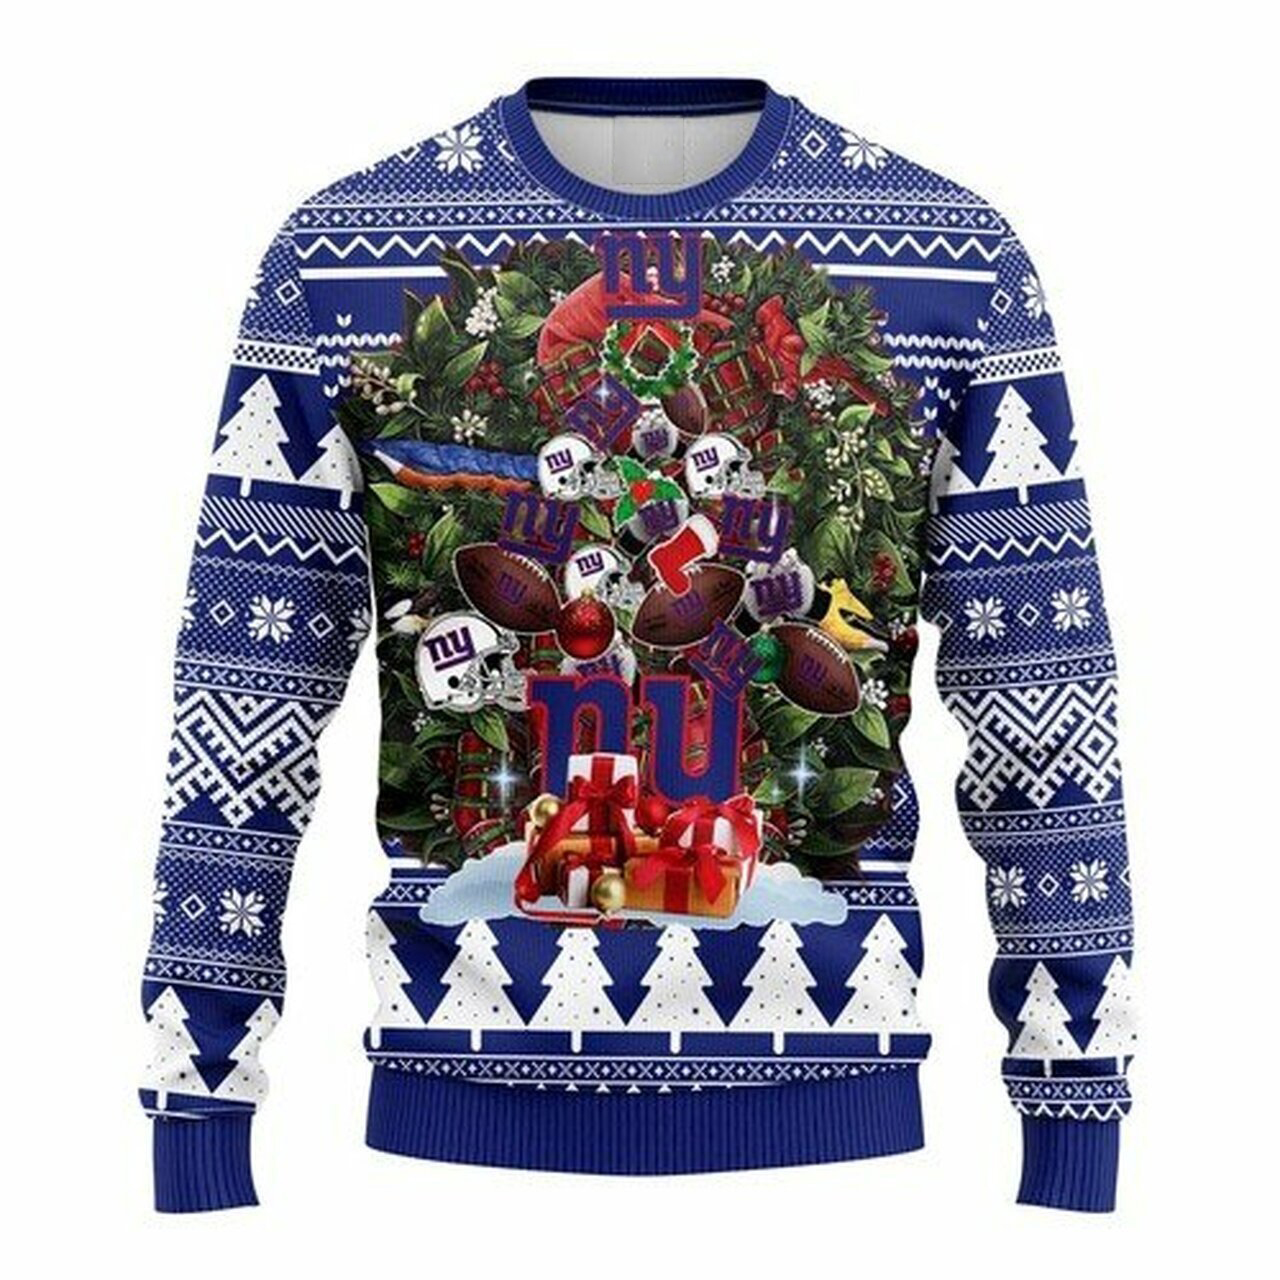 [ HOT ] NFL New York Giants christmas tree ugly sweater – Saleoff 040122